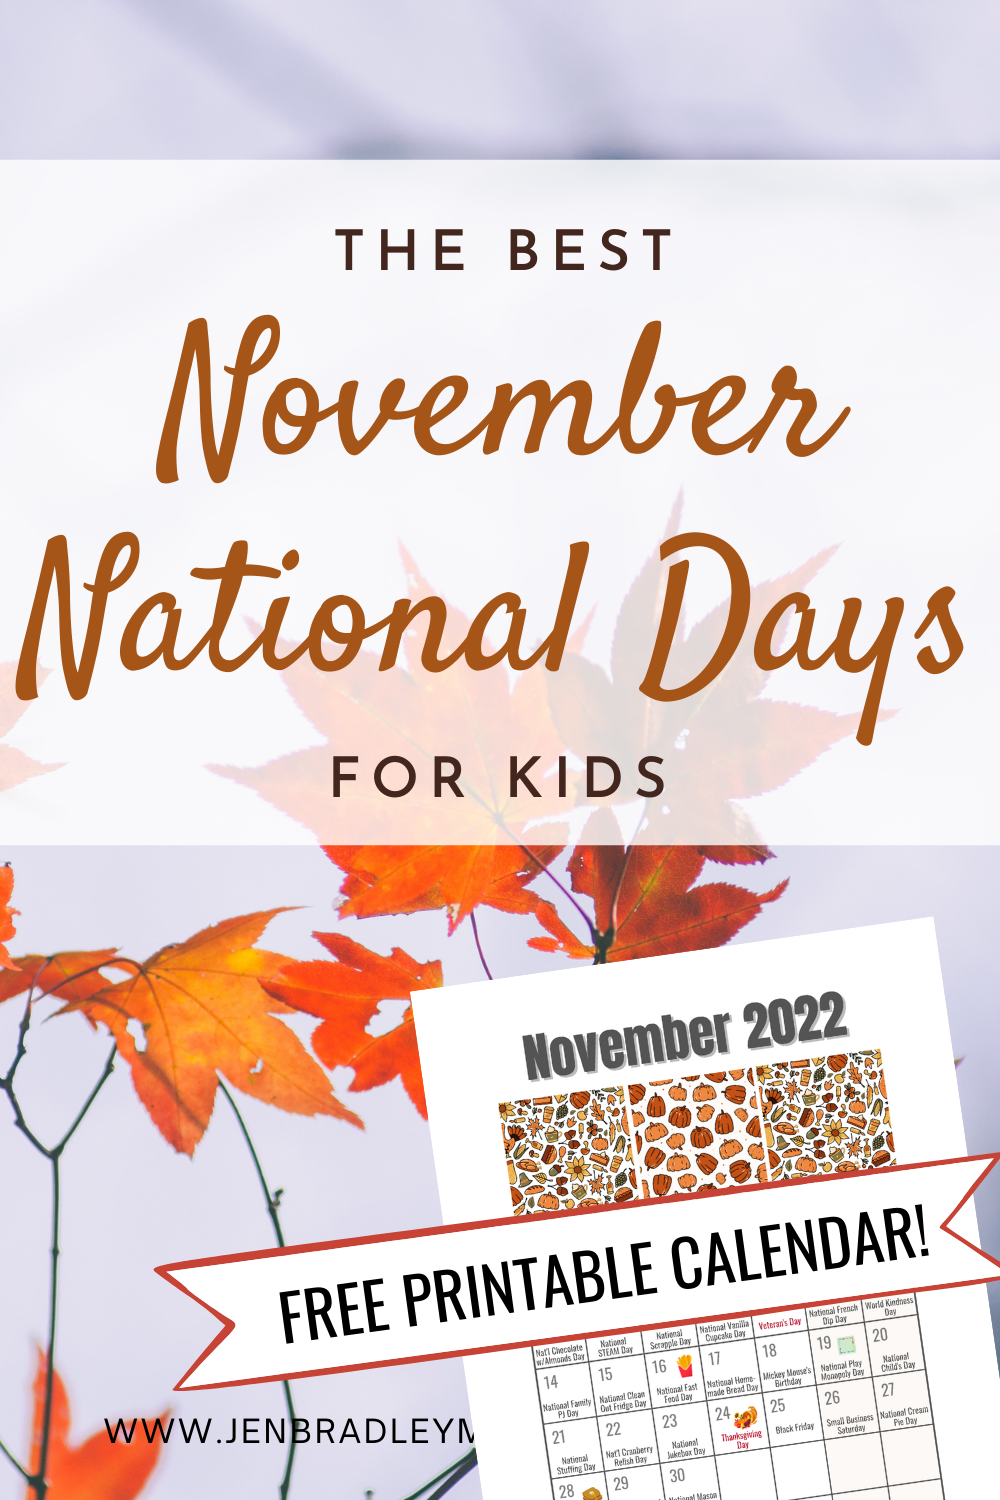 The Best November National Days for Kids